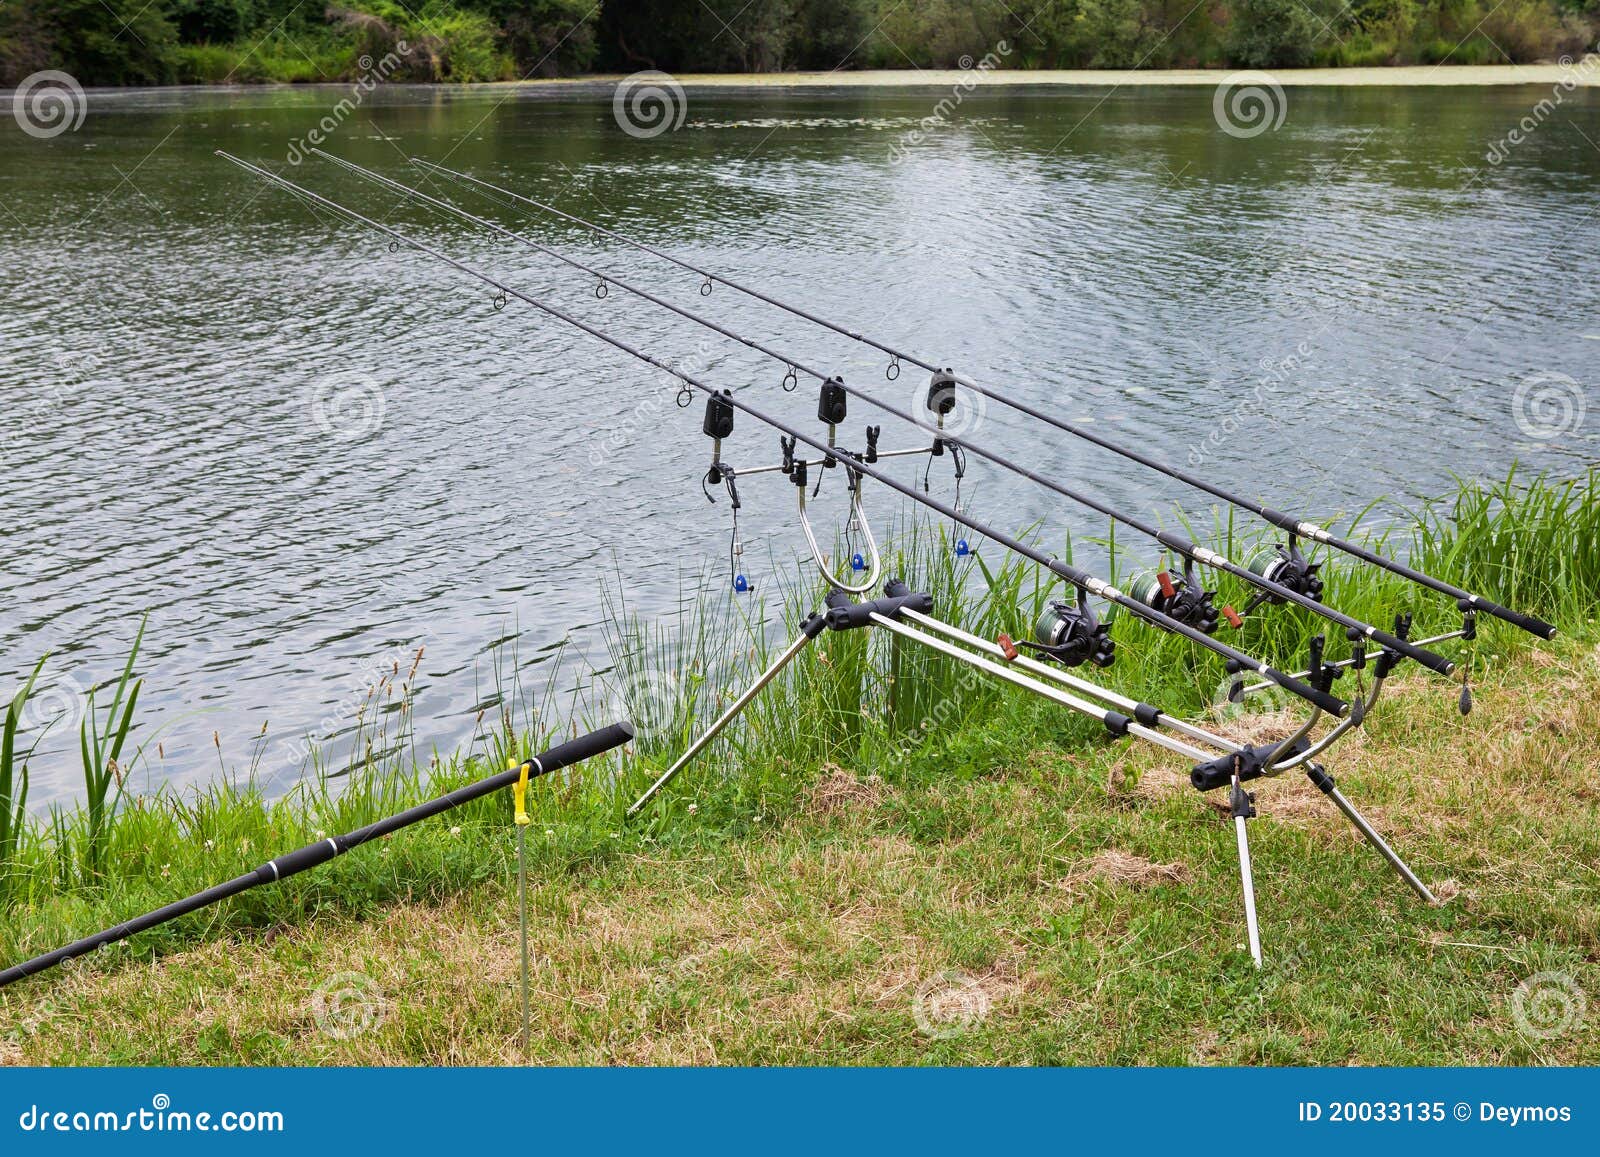 https://thumbs.dreamstime.com/z/fishing-poles-mounted-holder-20033135.jpg